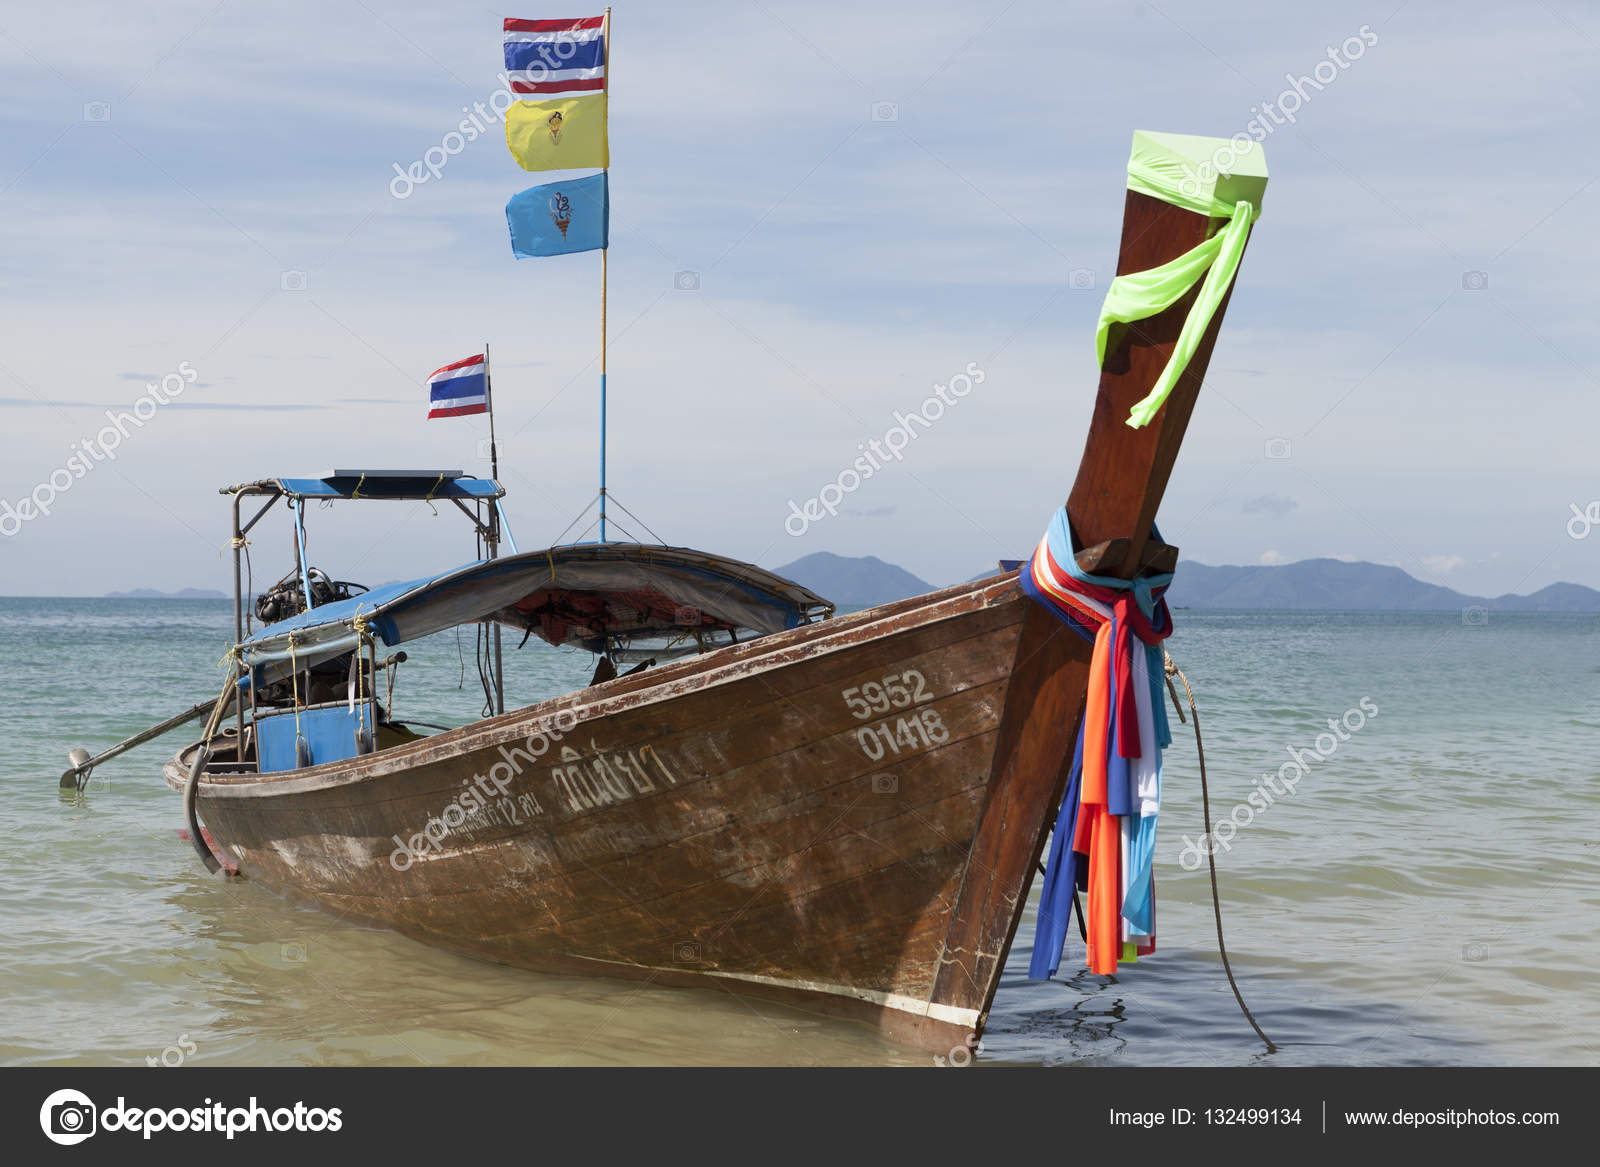 https://st3.depositphotos.com/1001439/13249/i/1600/depositphotos_132499134-stock-photo-traditional-thai-fishing-boats-with.jpg